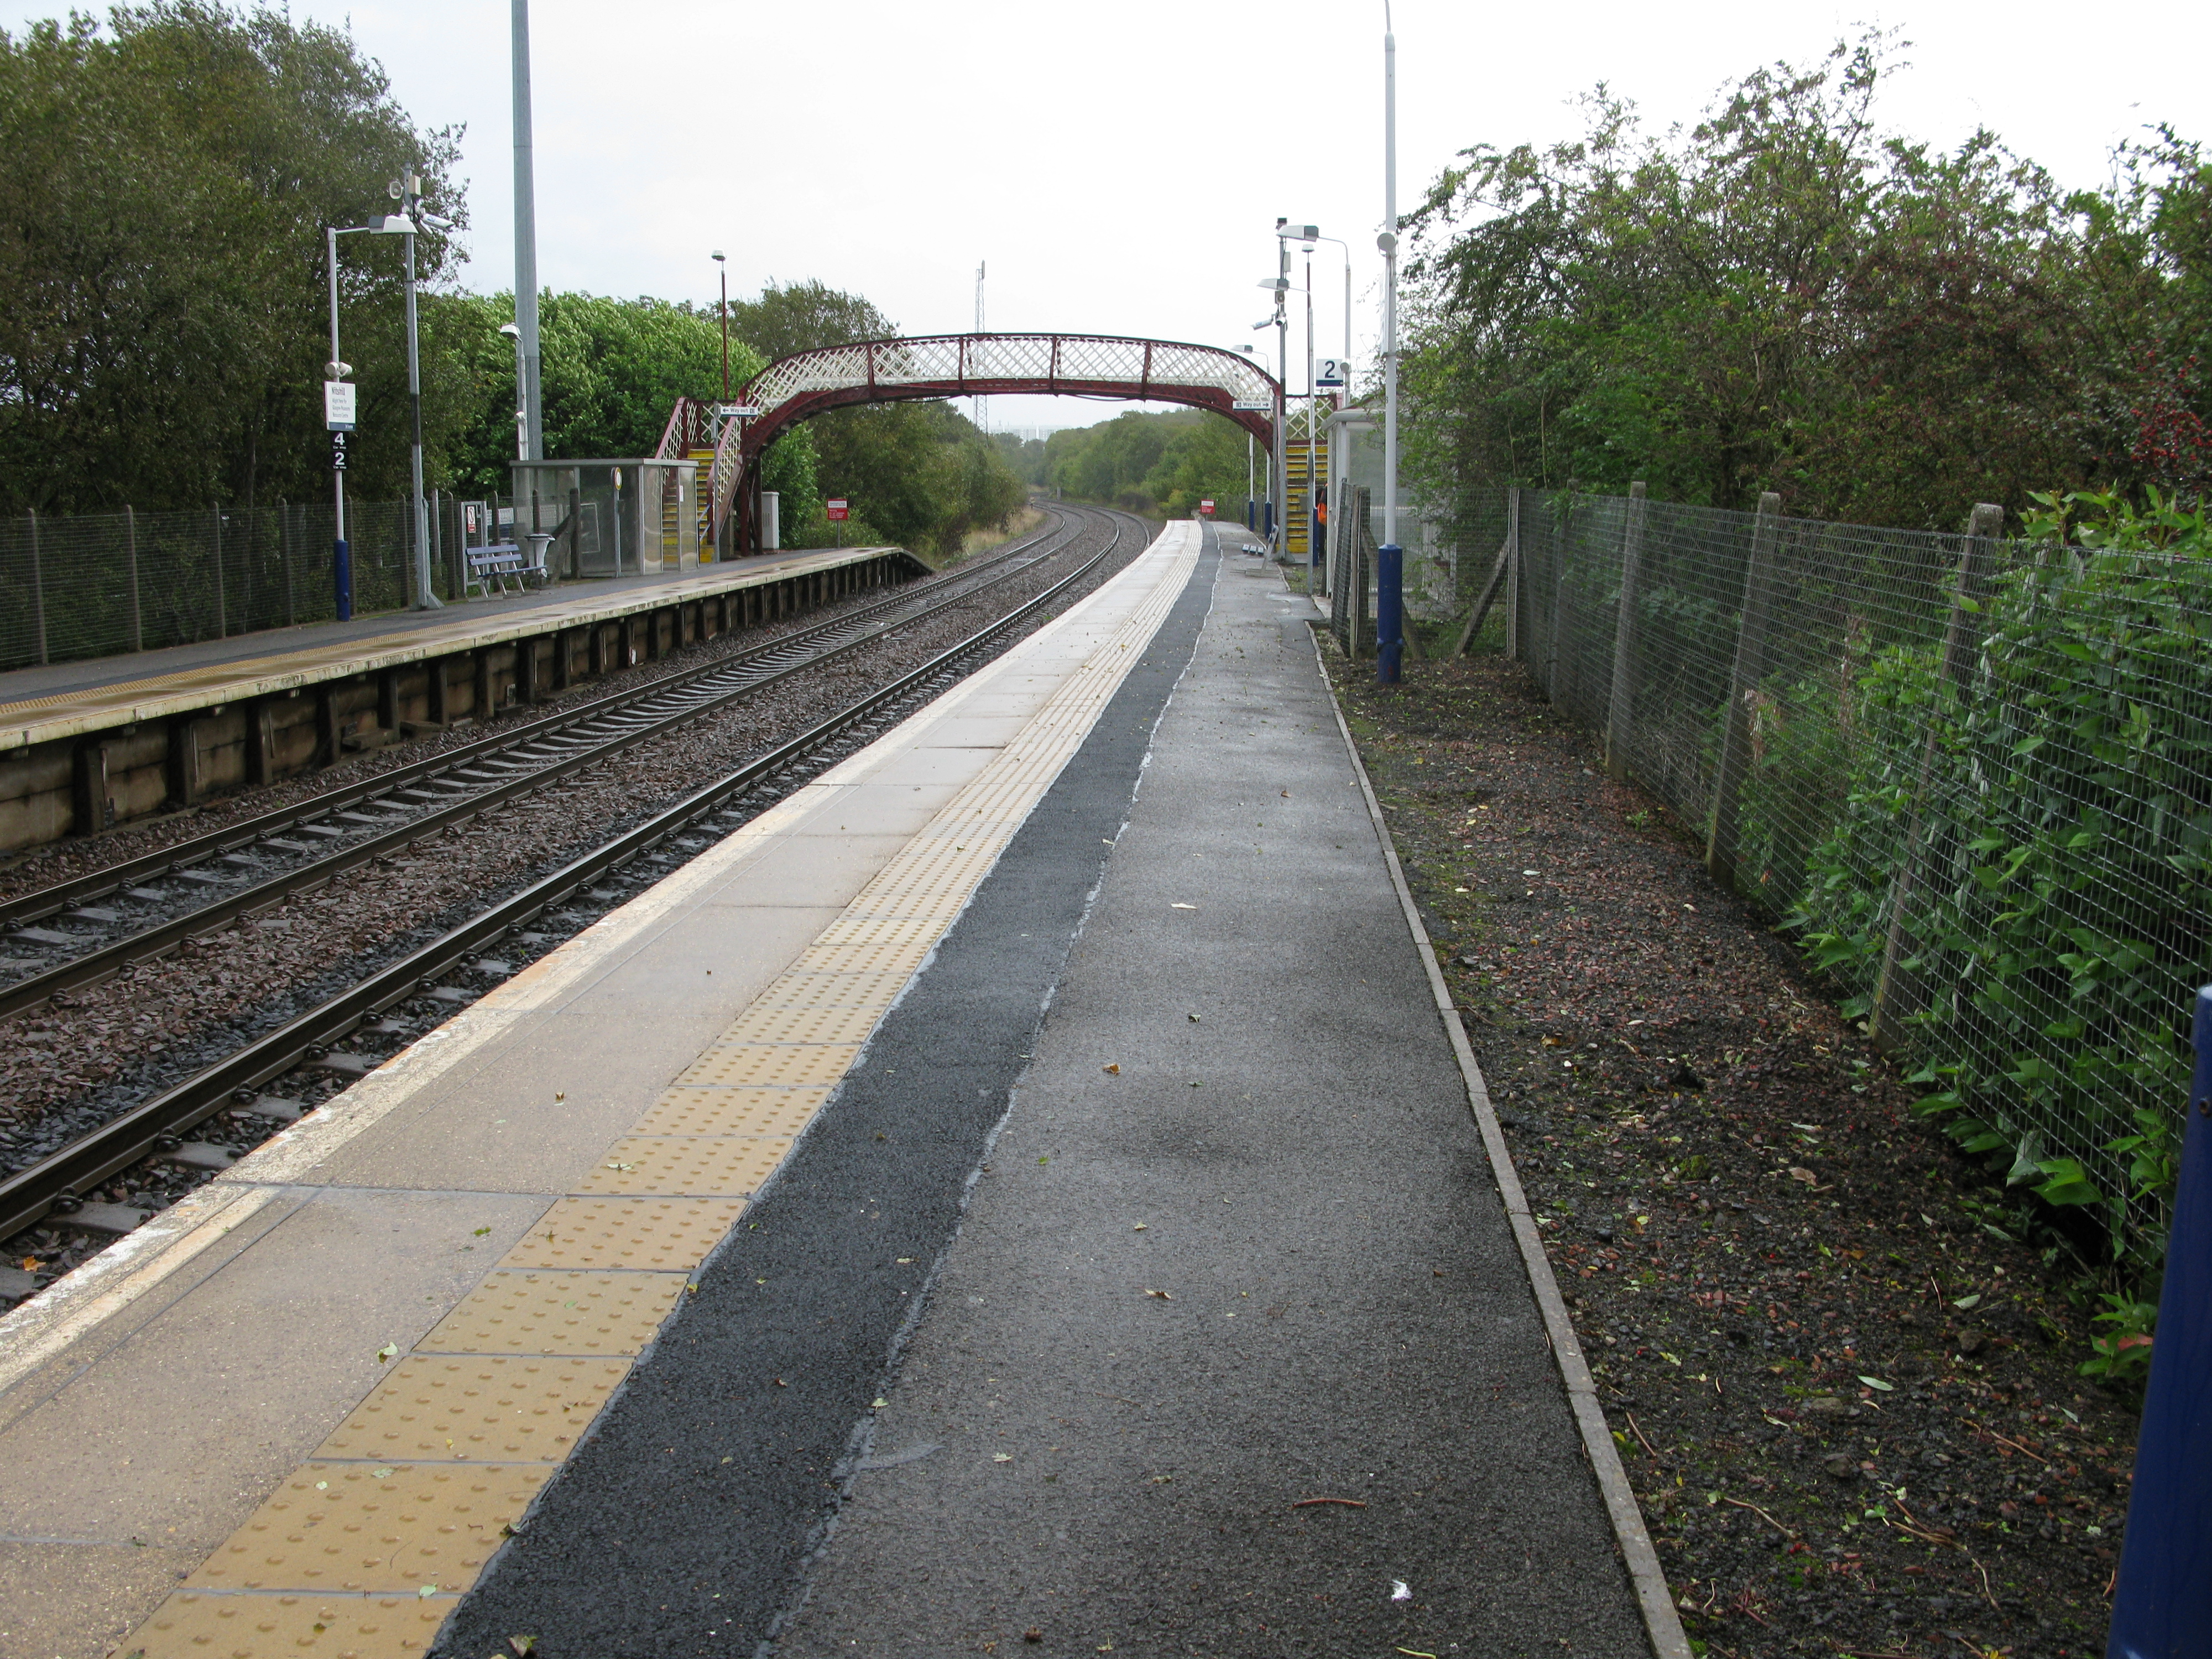 Nitshill railway station